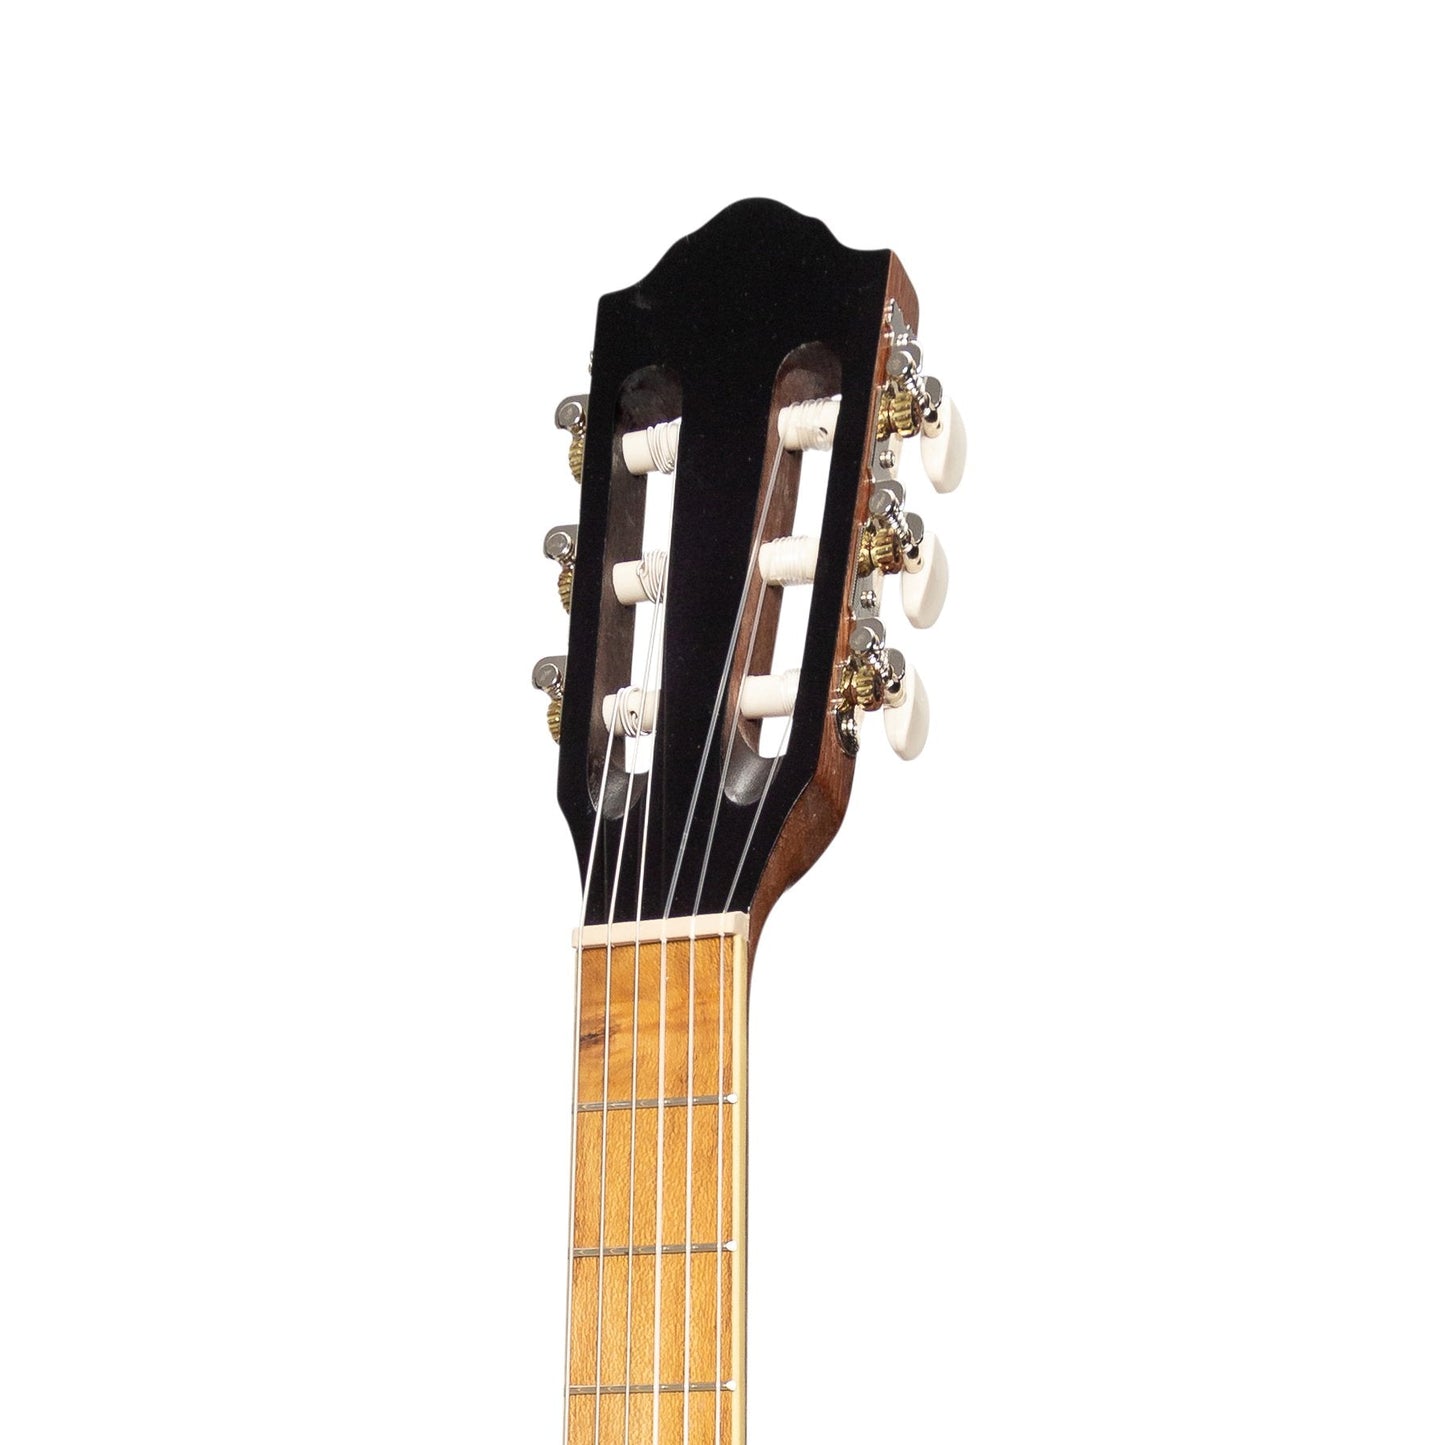 Martinez 'Slim Jim' Full Size Student Classical Guitar with Built In Tuner (Jati-Teakwood)